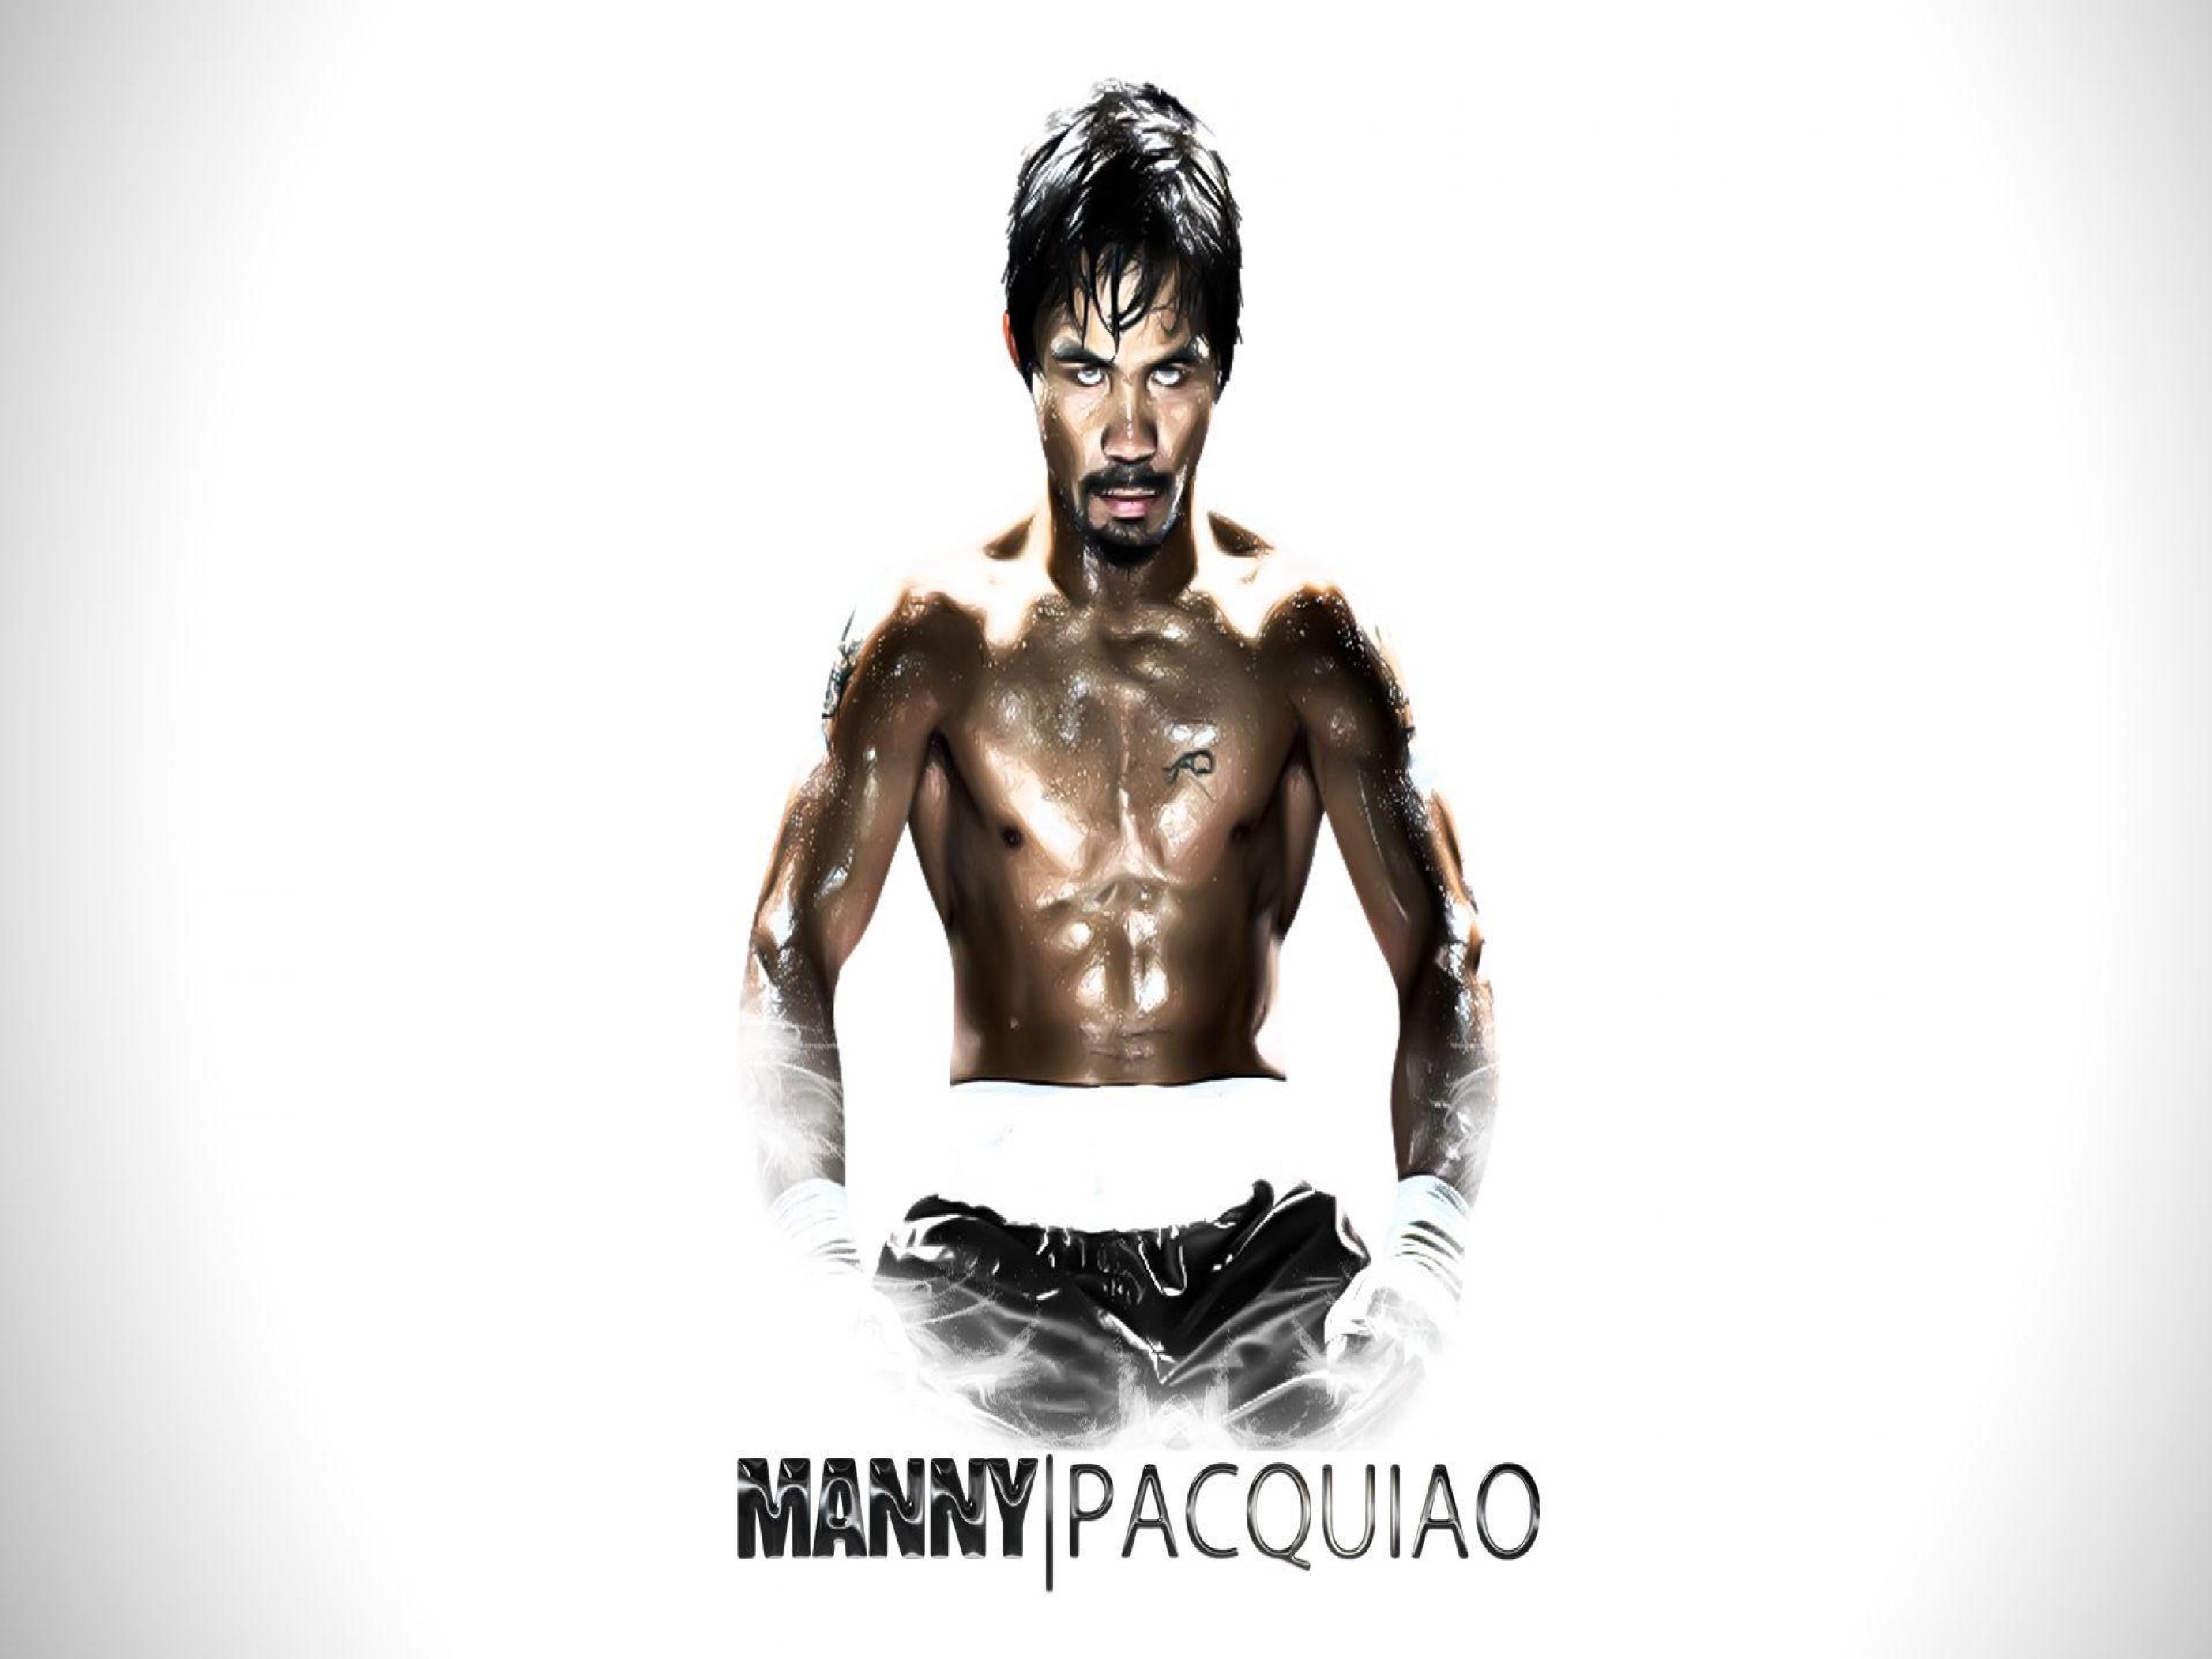 37+] Manny Pacquiao Wallpapers - WallpaperSafari